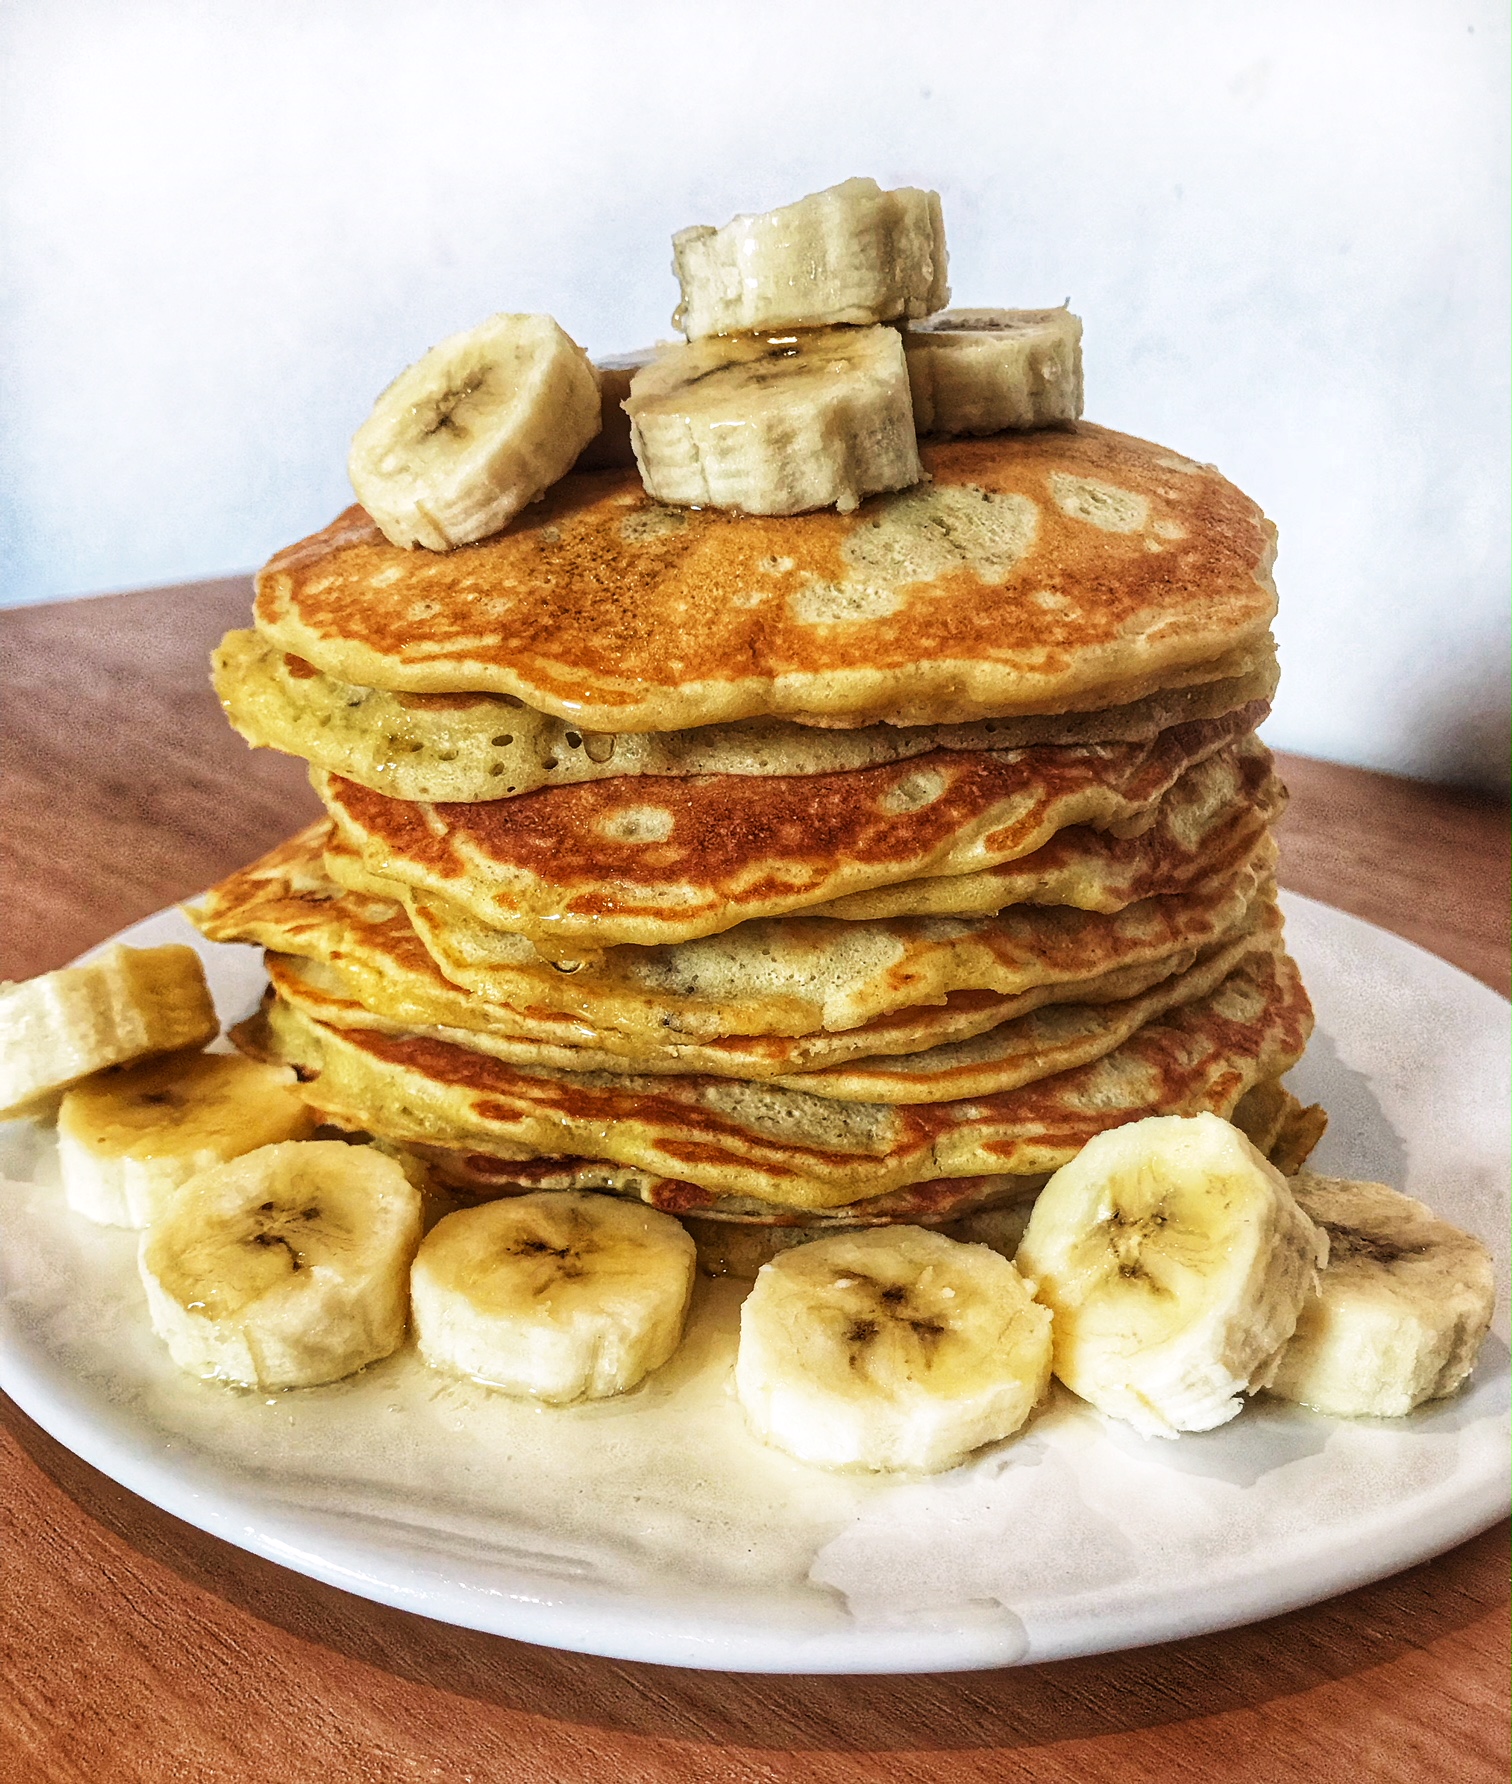 Pancakes à la banane (Banana Pancakes) – Aux Fourneaux avec Marta